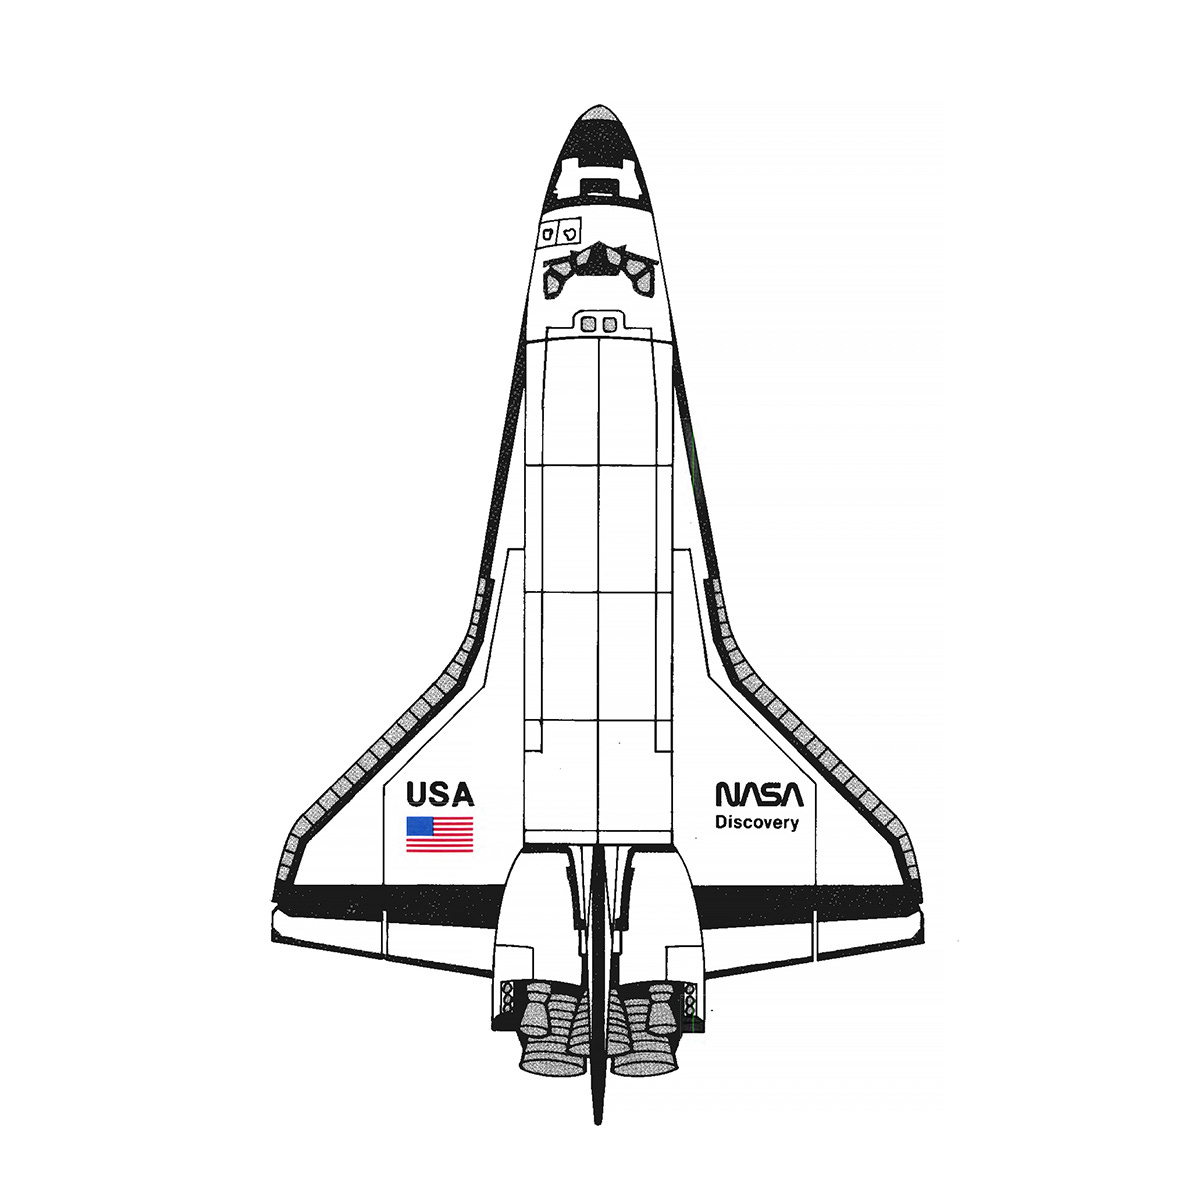 Danne & Blackburn's 1974 logo and identity for NASA